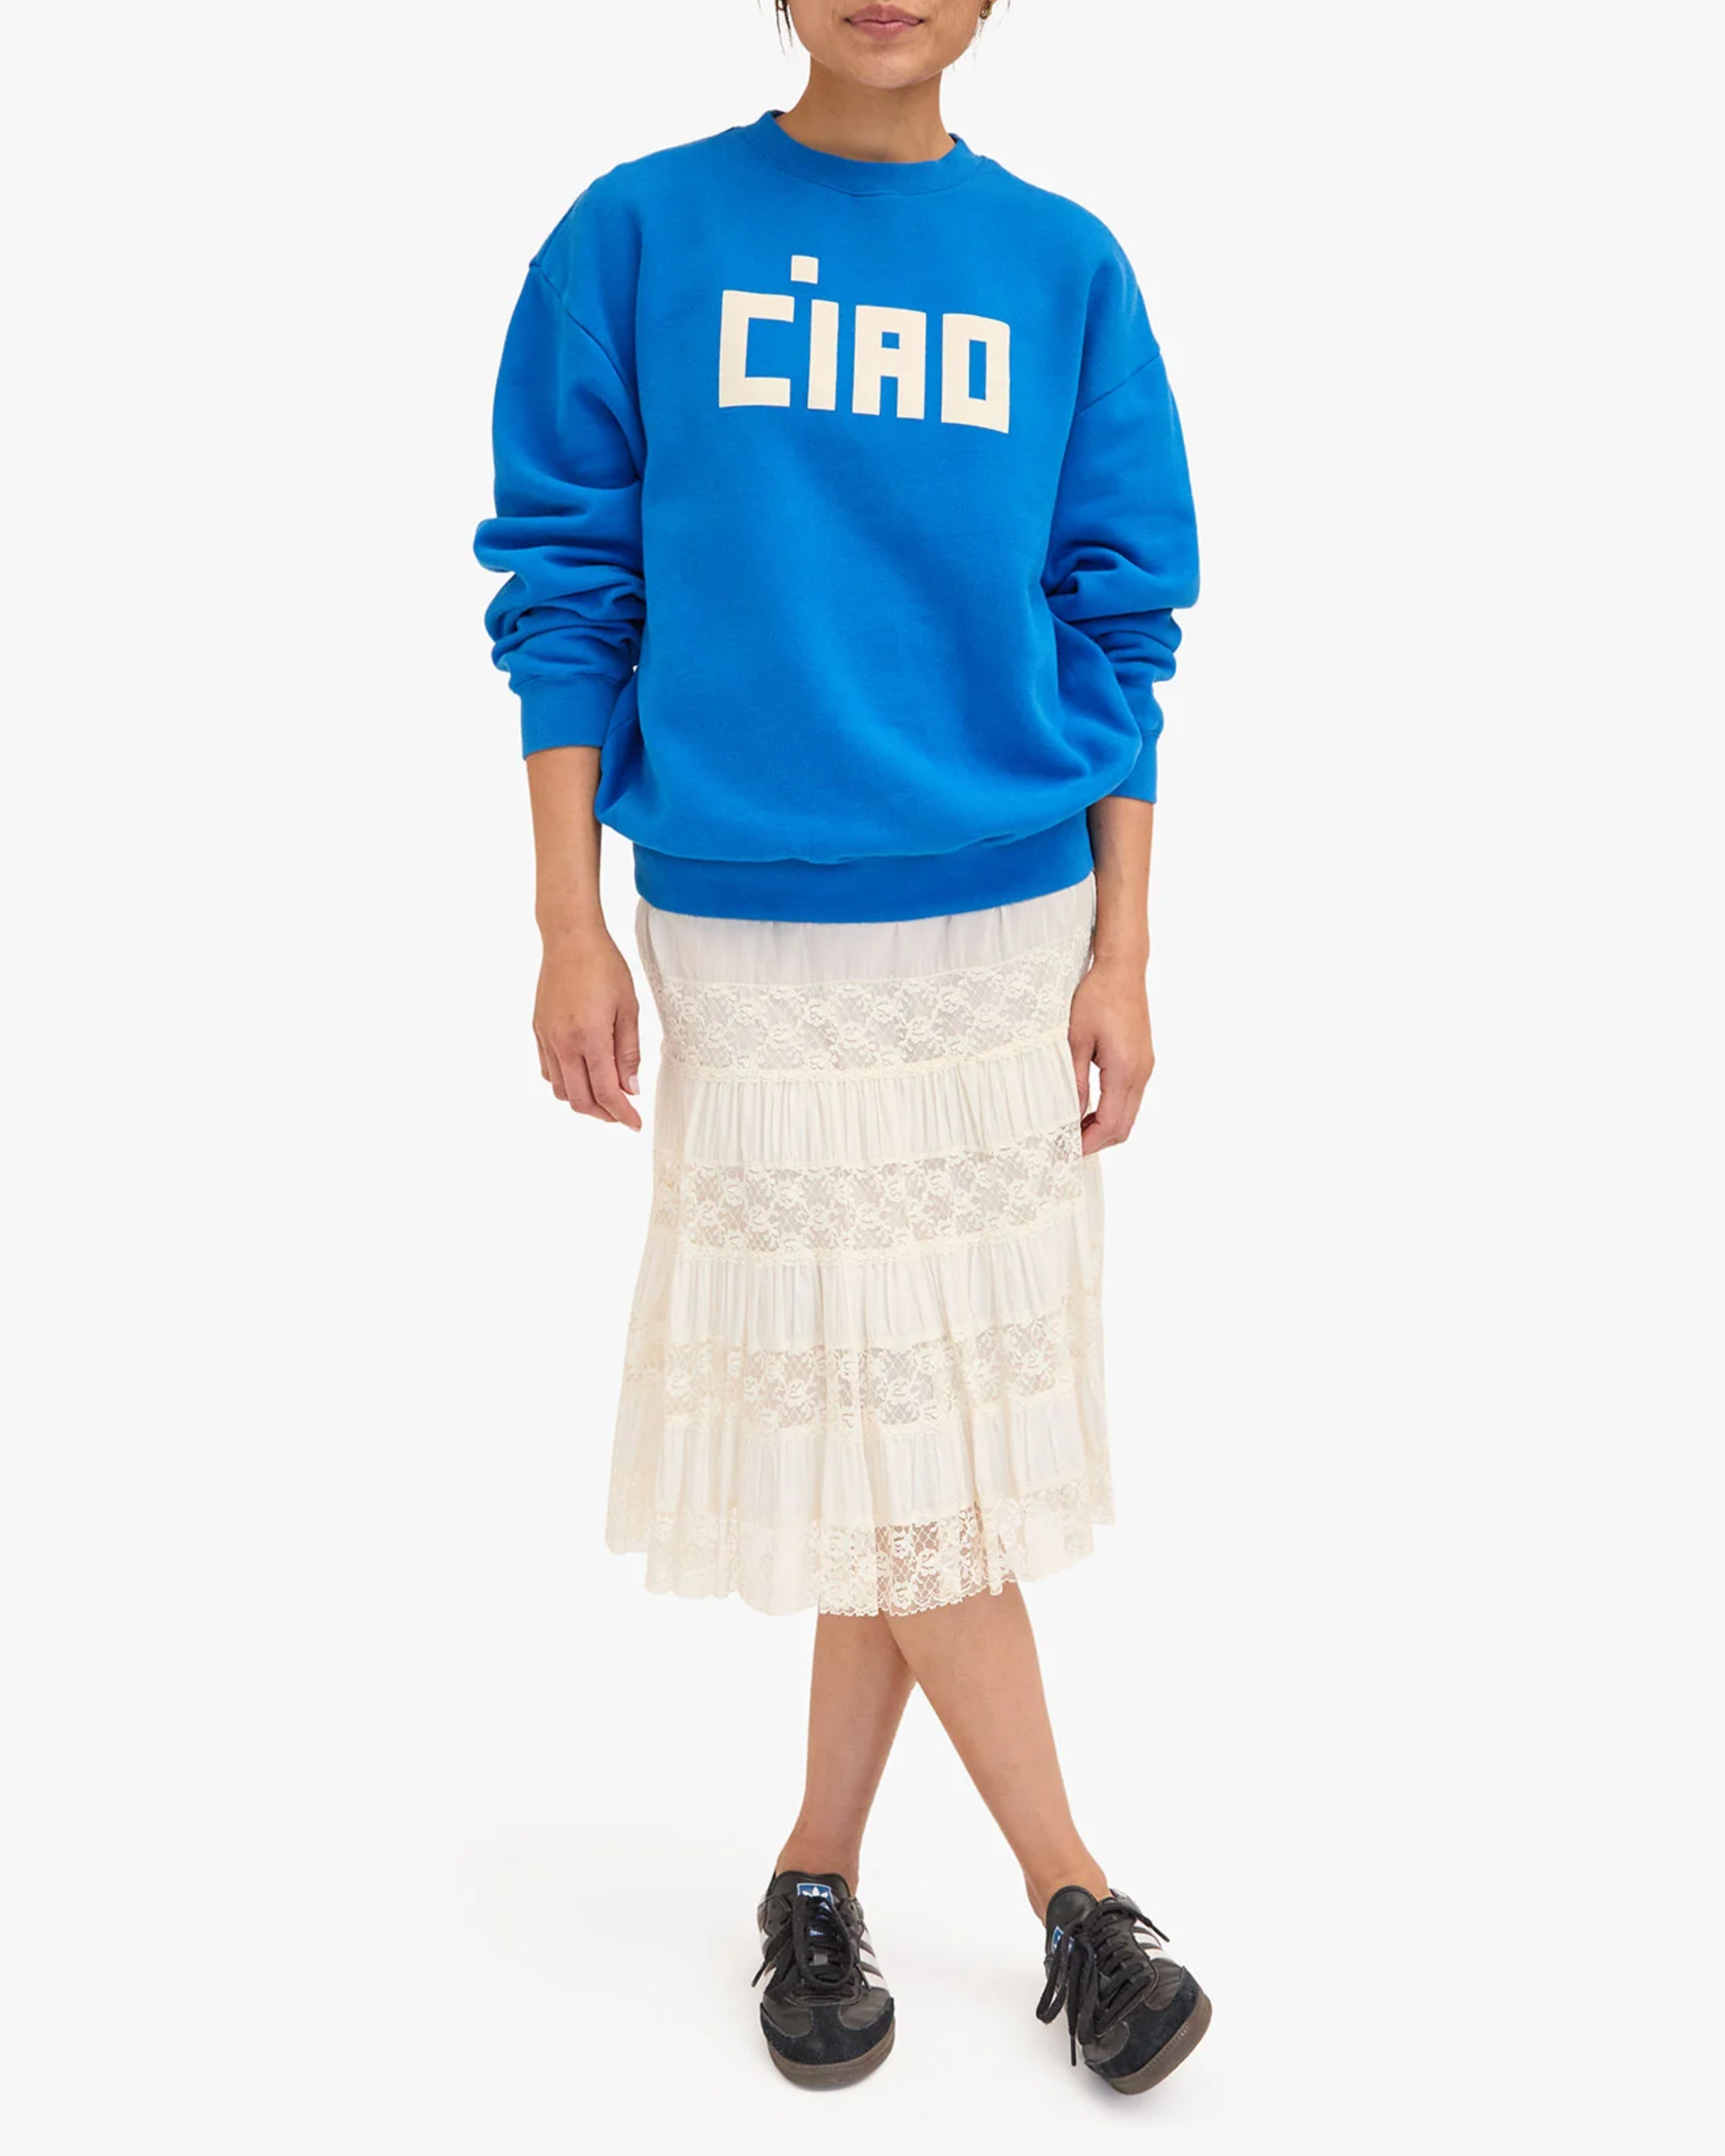 Clare V. Oversized Sweatshirt in Bright Cobalt & Cream Block Ciao